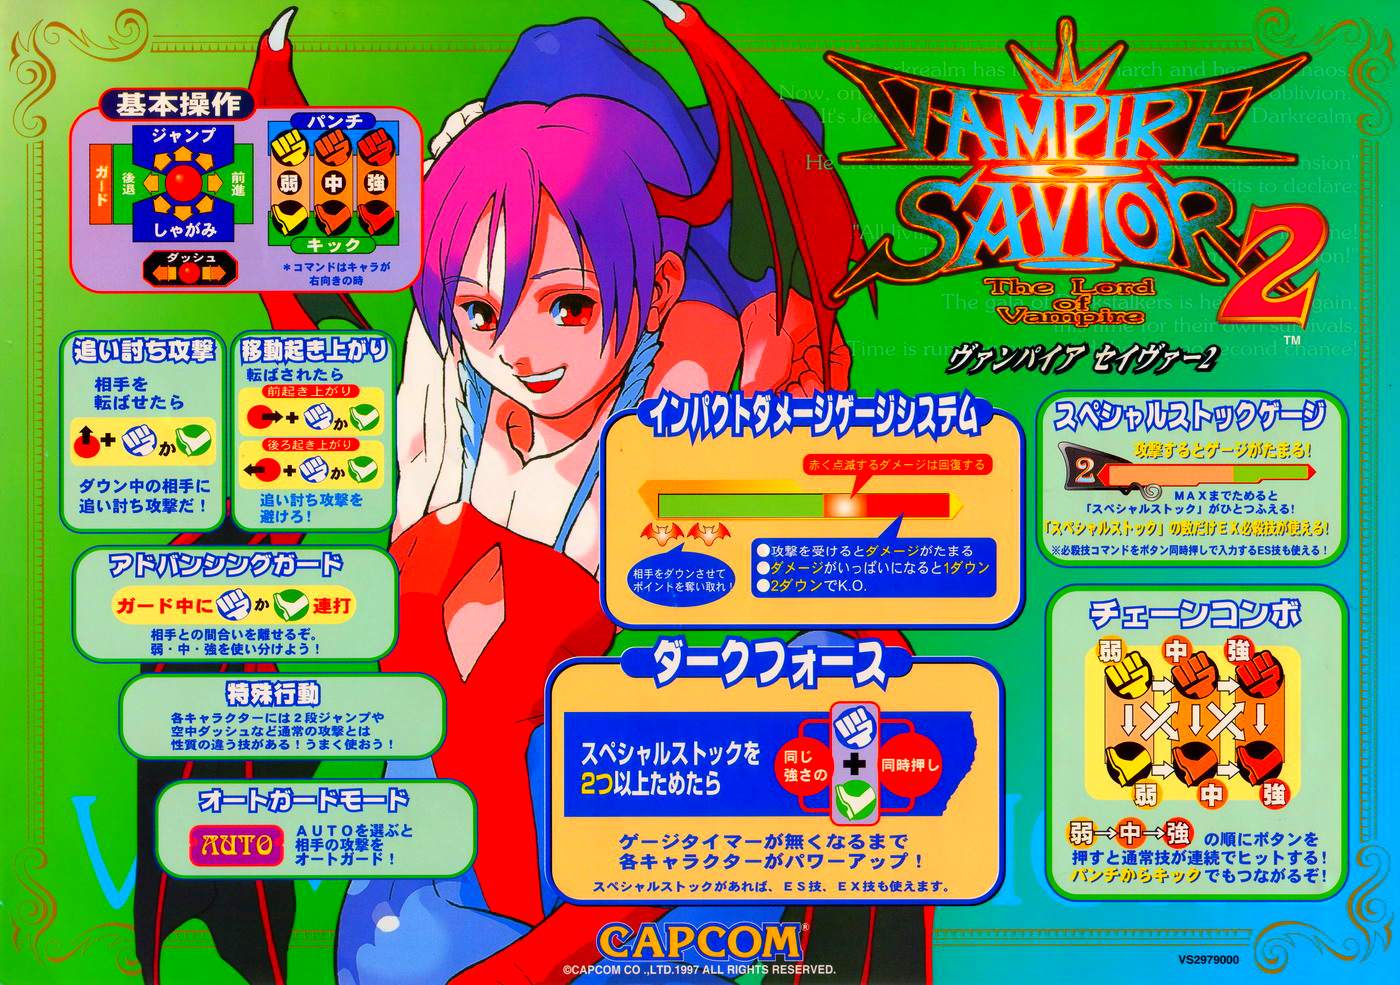 Vampire Savior 2: The Lord of Vampire (Japan 970913) flyer